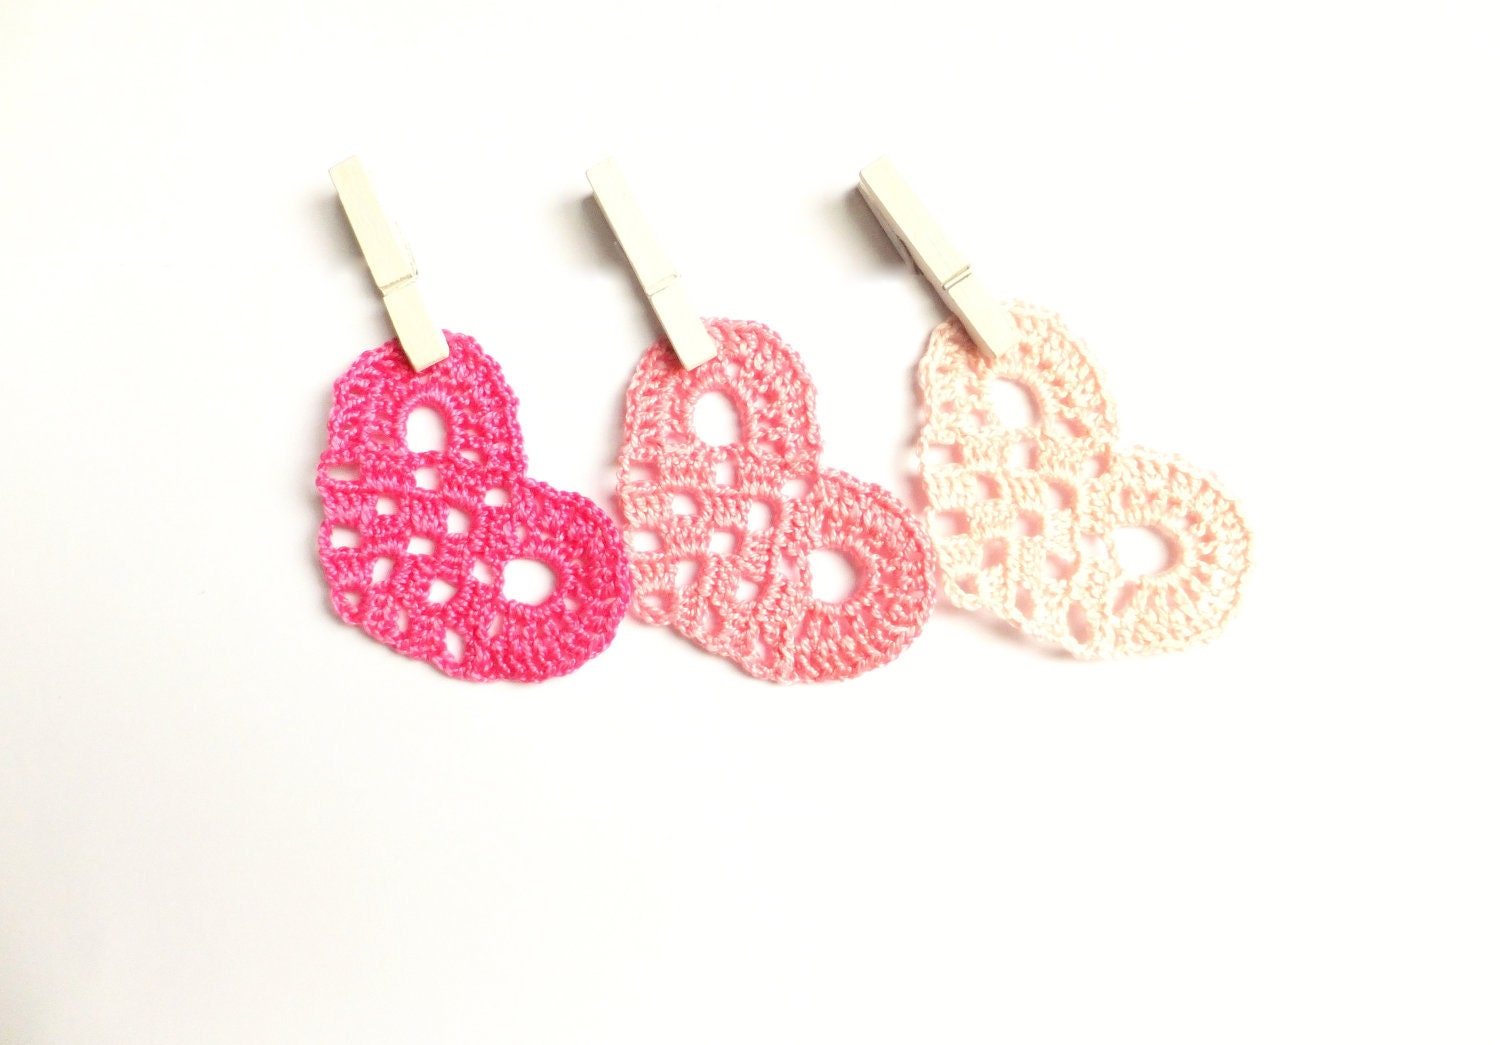 Crochet pink hearts Wedding decorations favors applique 